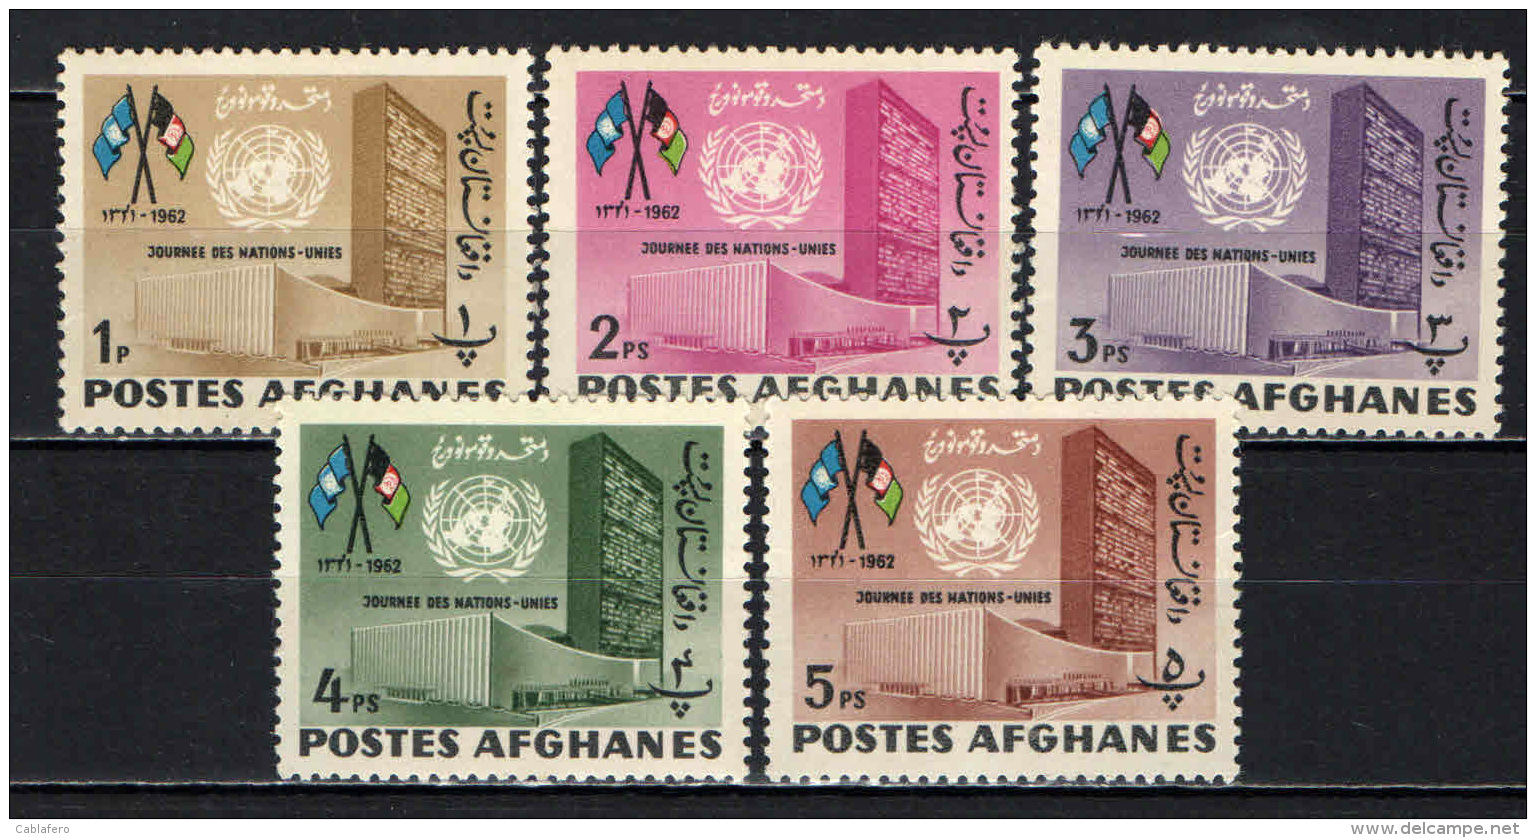 AFGHANISTAN - 1962 - GIORNATA DELLE NAZIONI UNITE - GOMMA MACCHIATA - MNH - Afghanistan